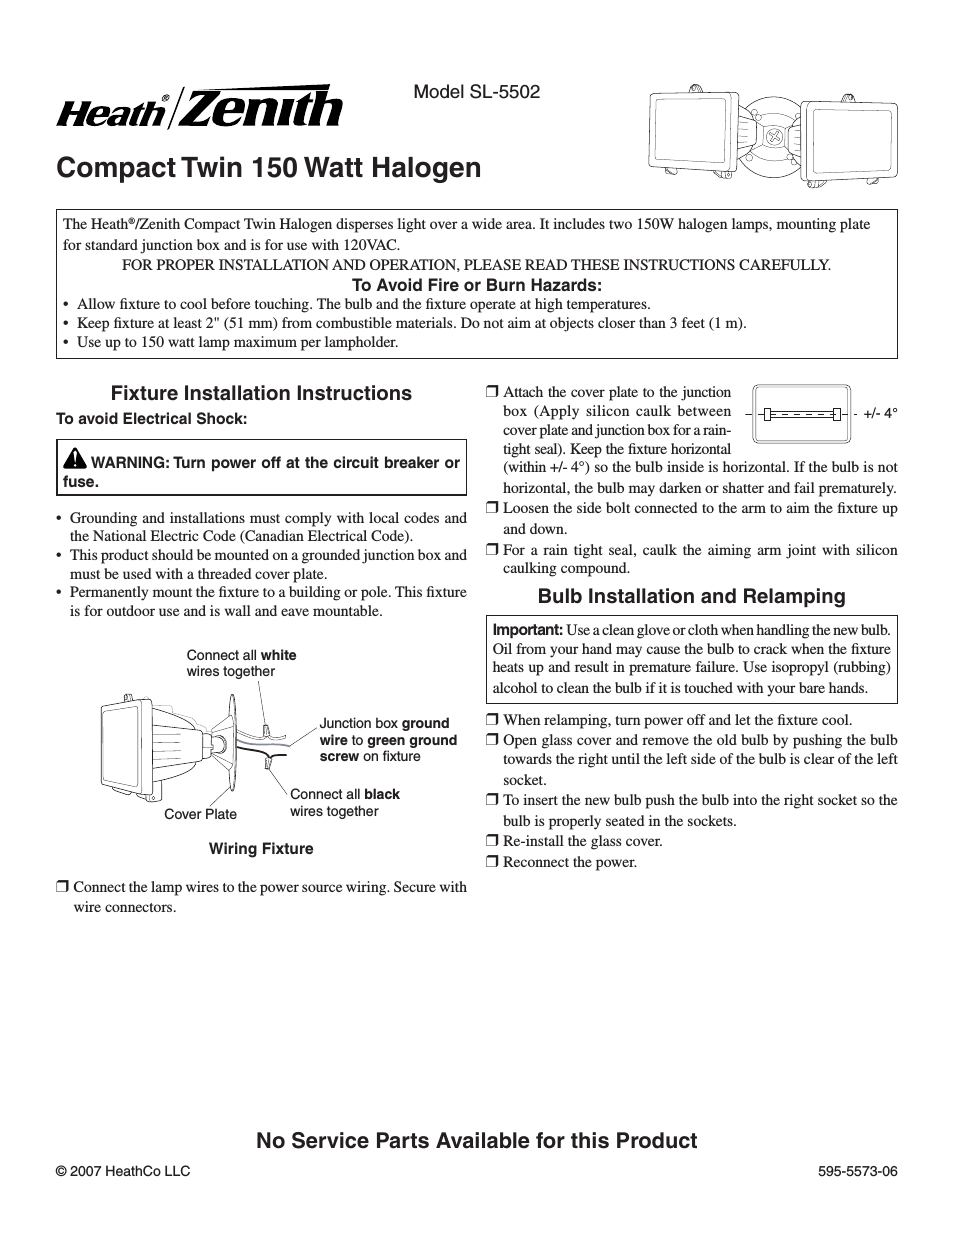 Compact Twin 150 Watt Halogen SL-5502